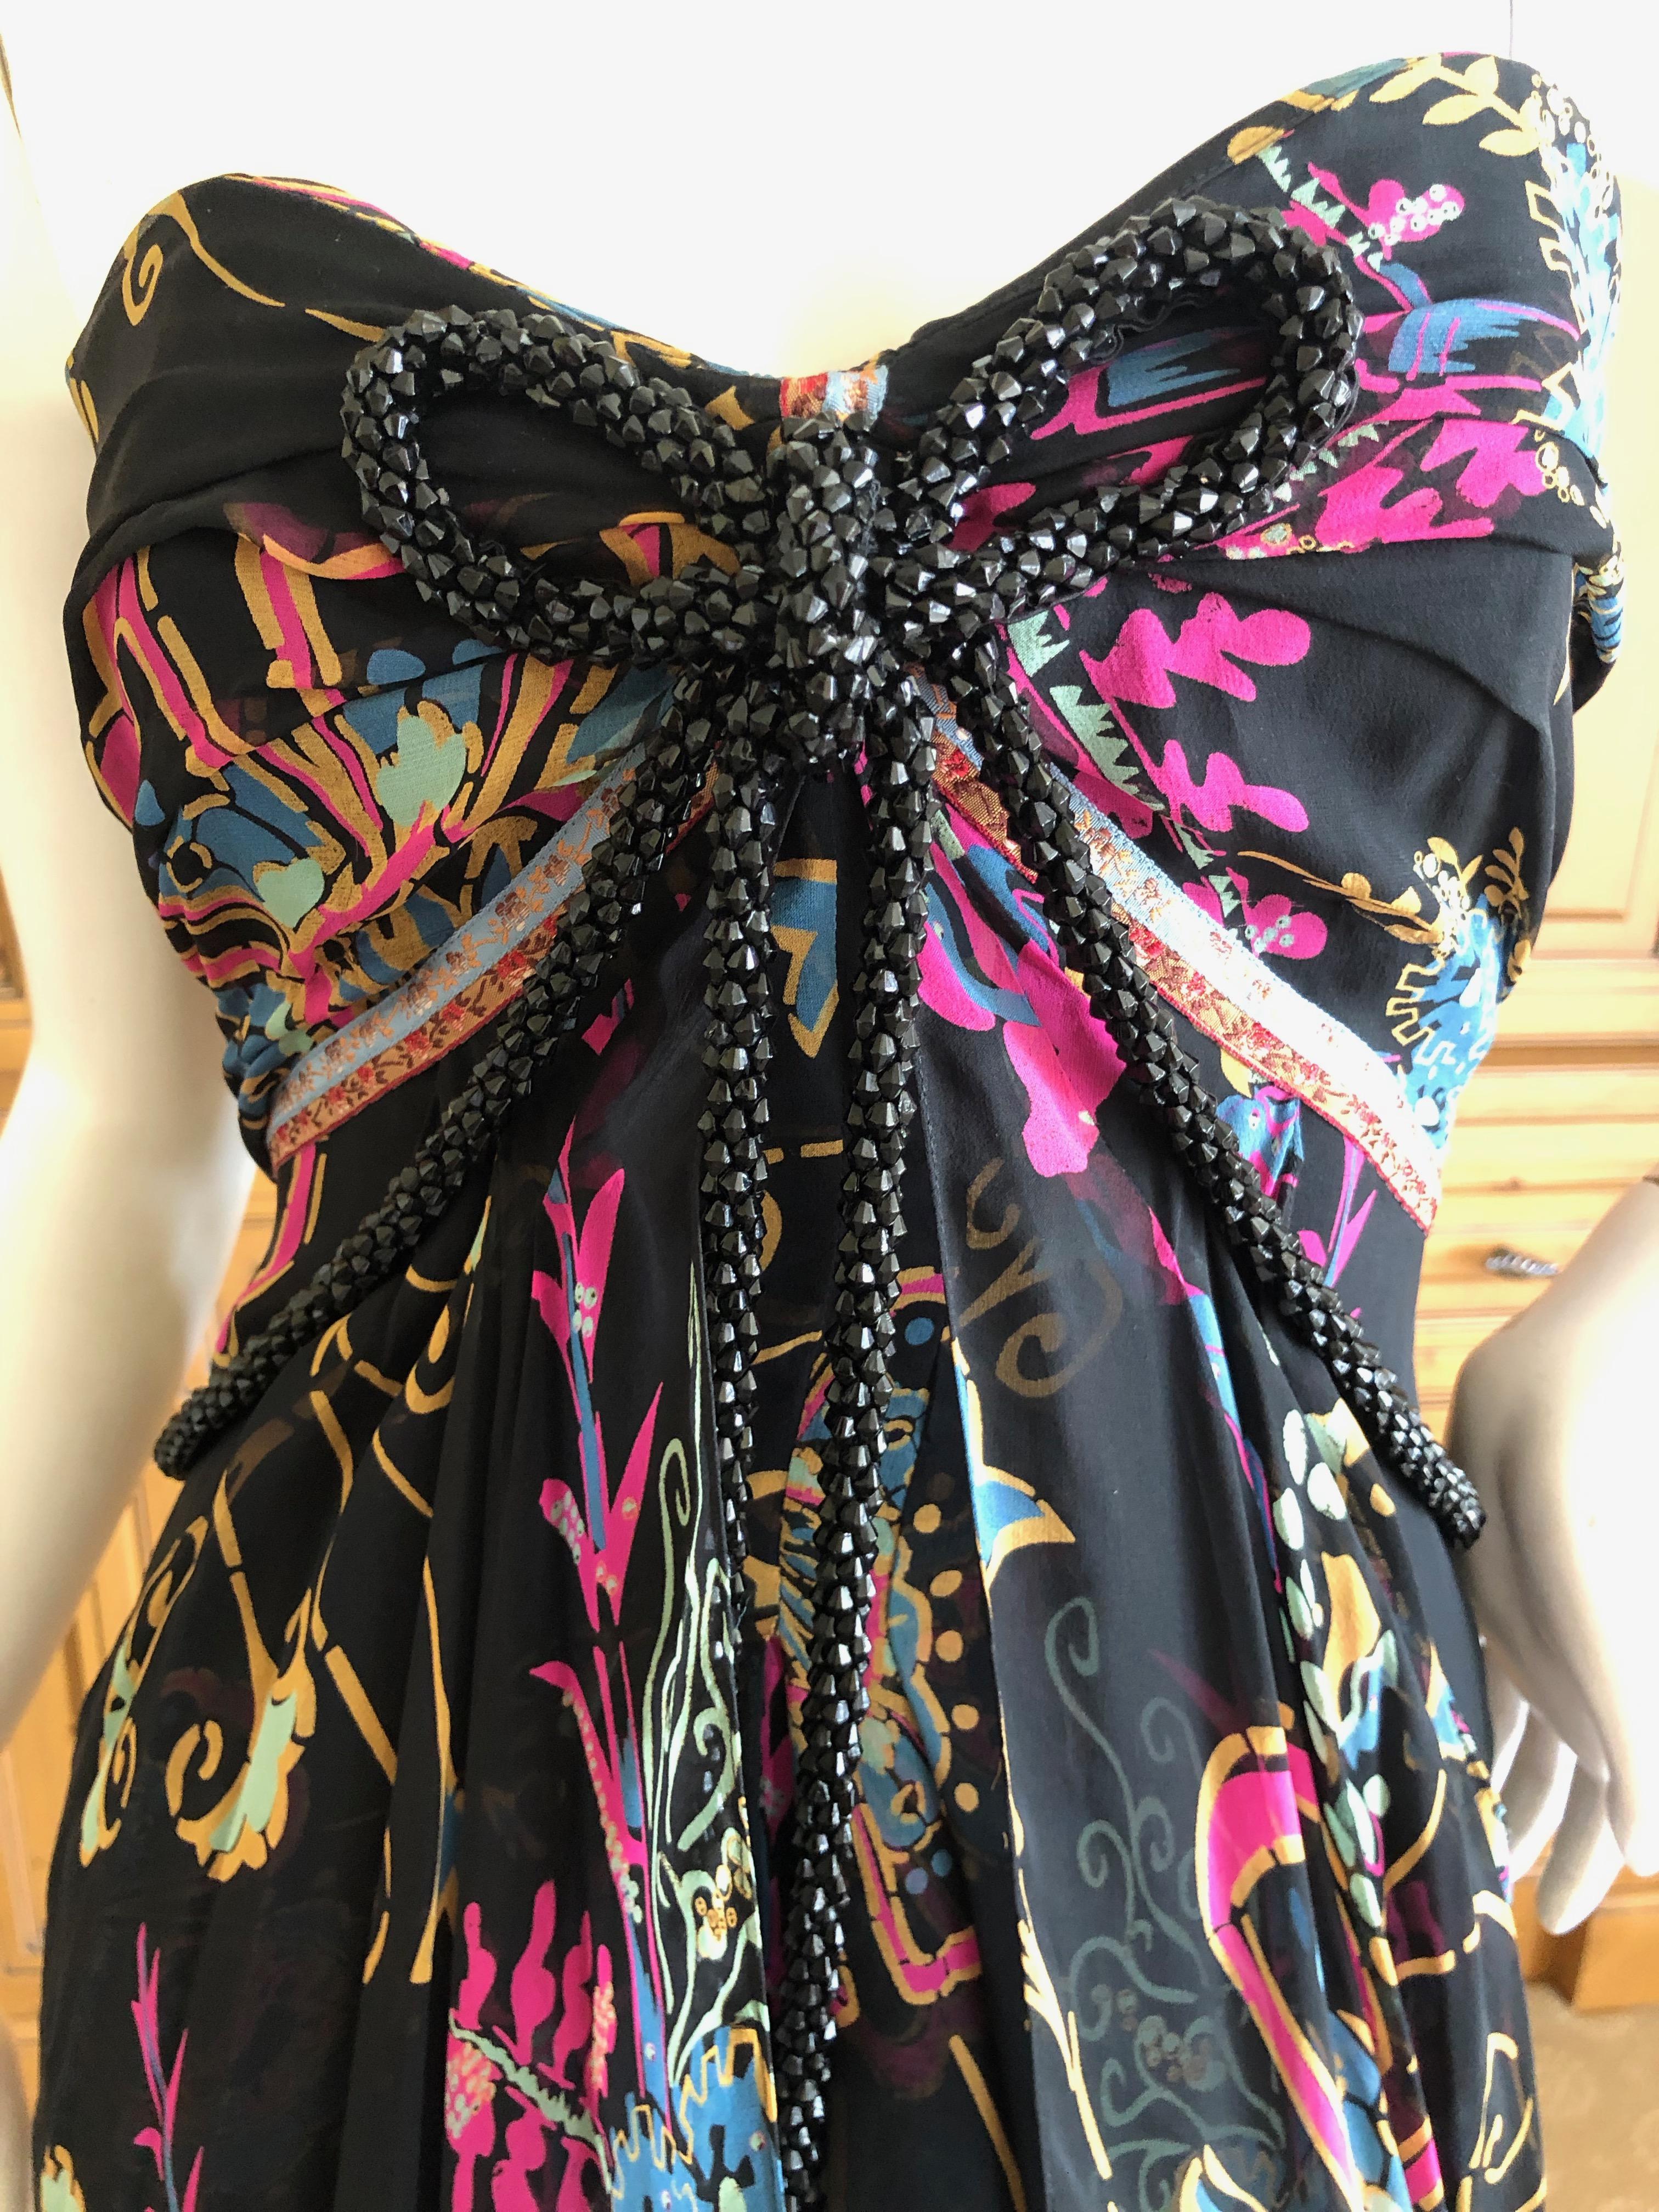 Christian Lacroix Vintage Floral Silk Evening Dress with Jet Bead Trim
Size 40
Bust 34